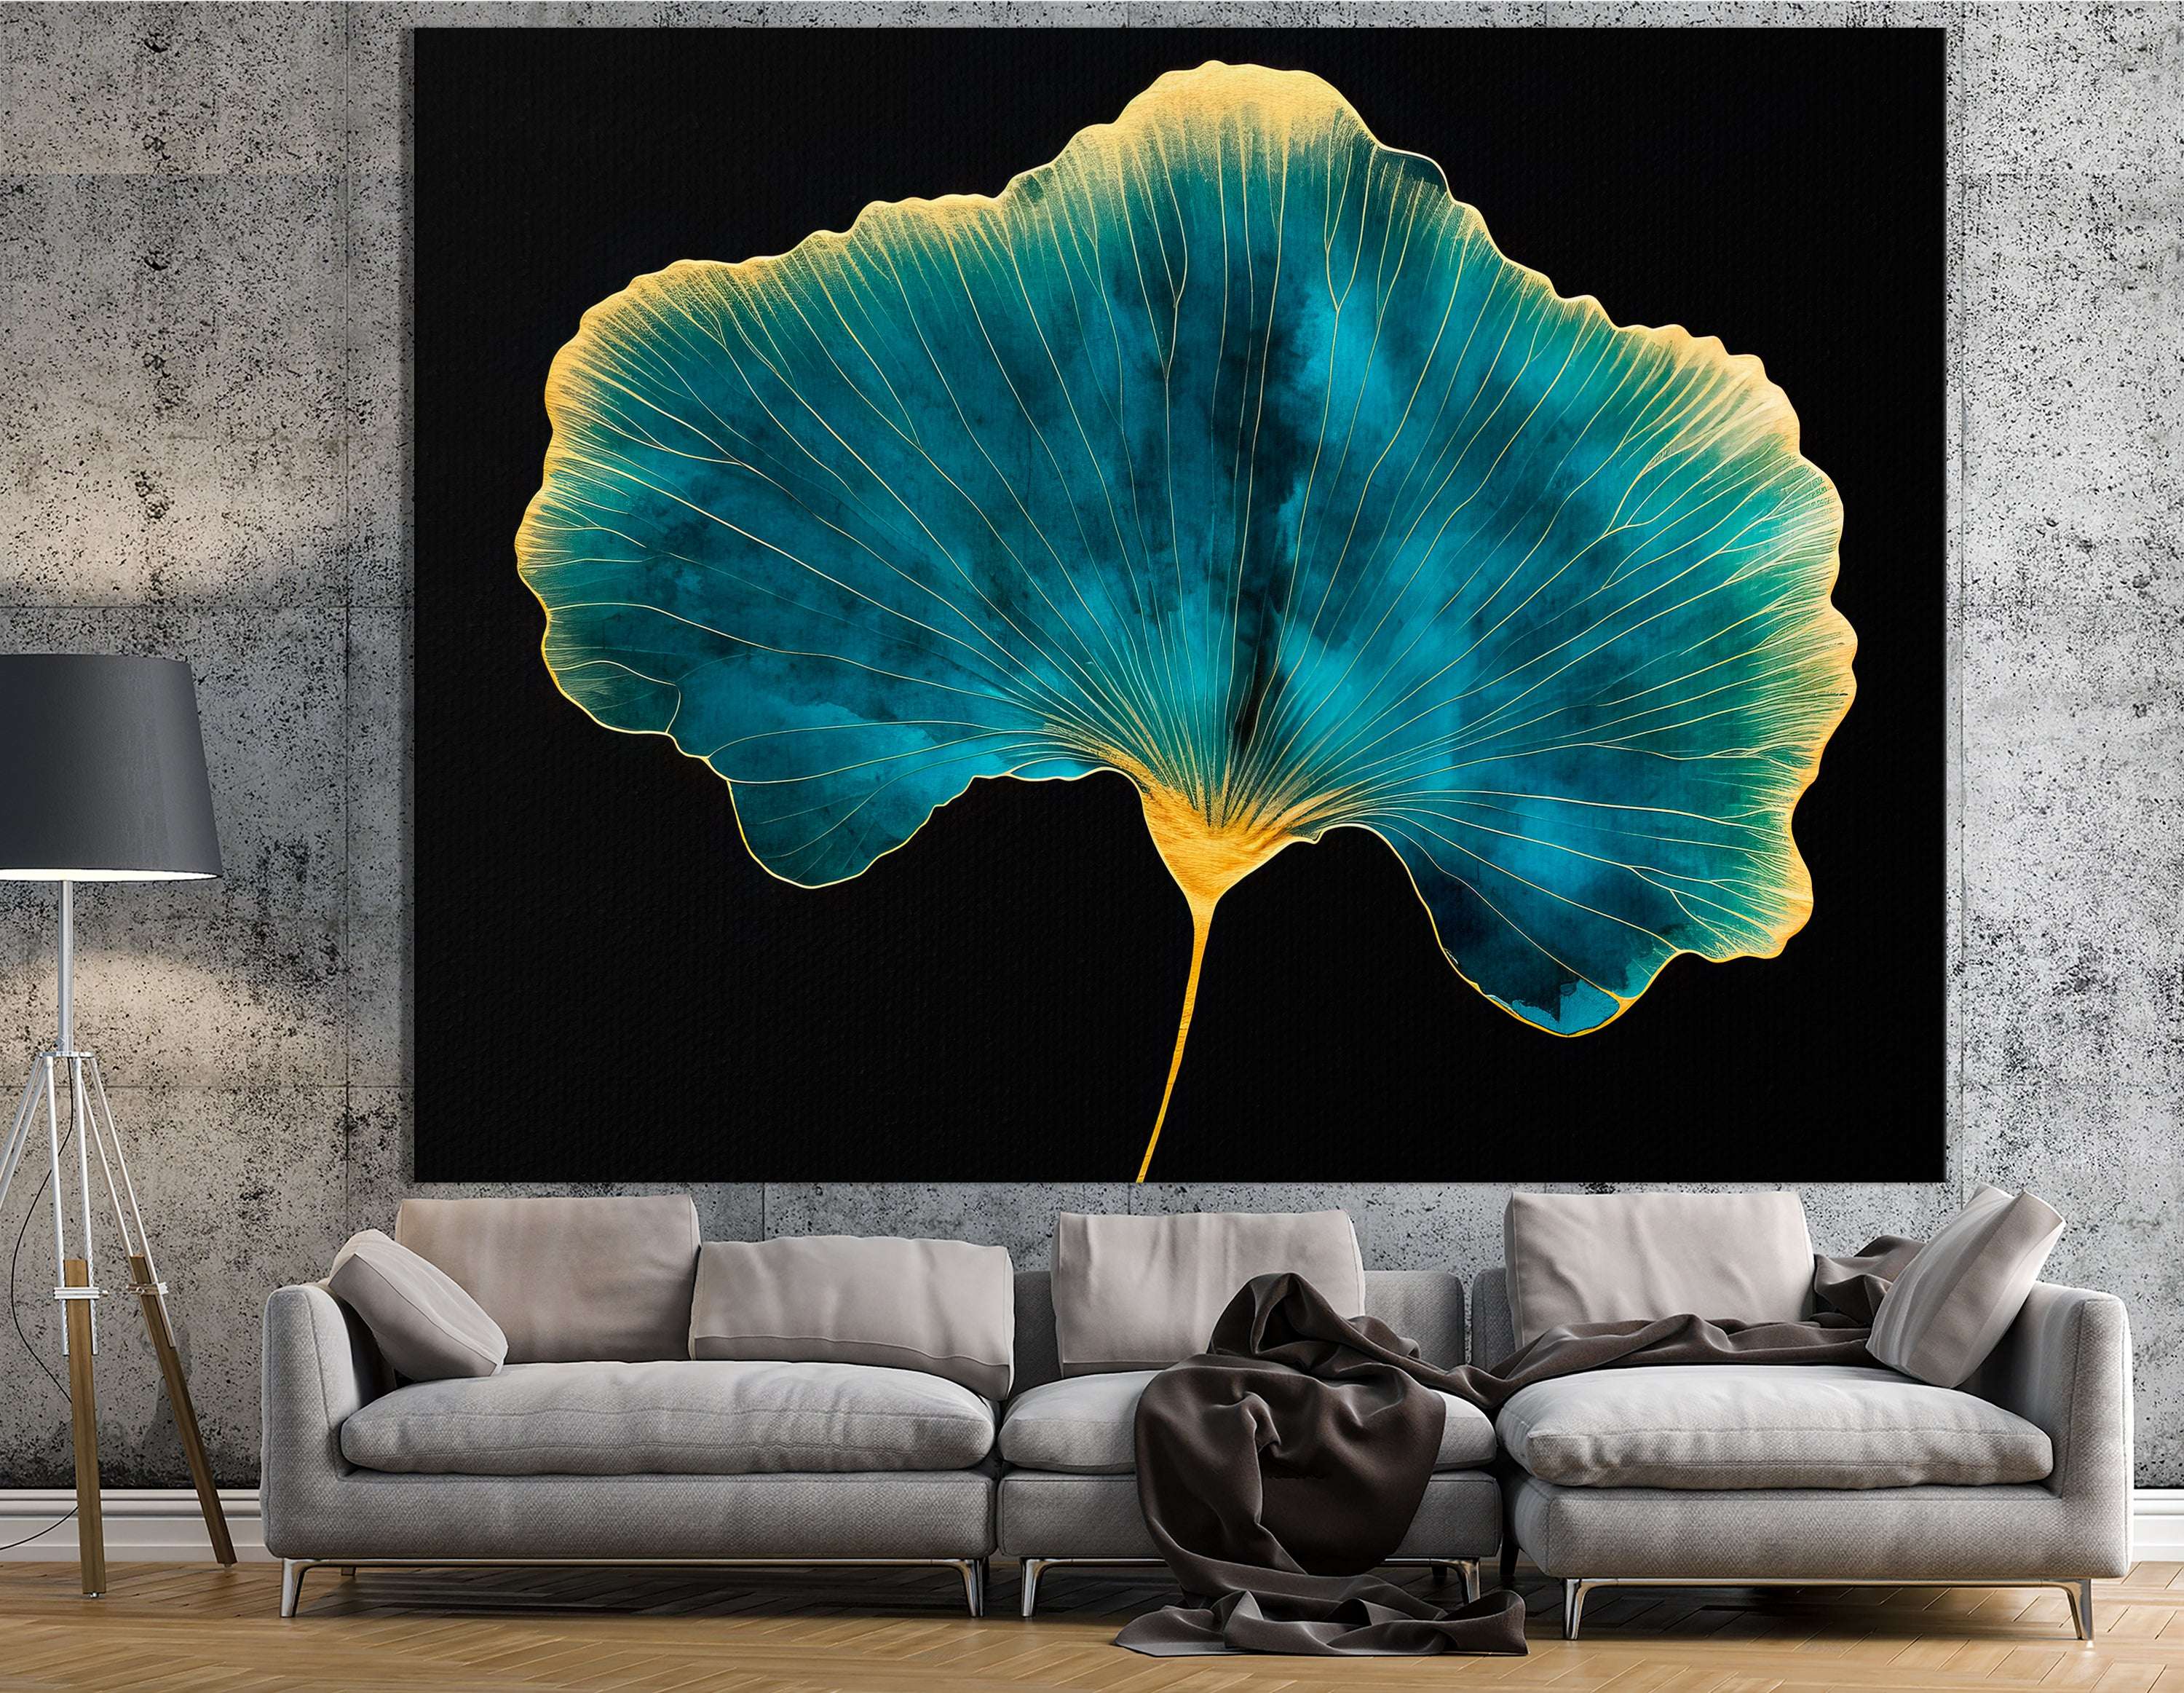 Cyan Ginkgo Leaf with Golden Edges - Canvas Print - Artoholica Ready to Hang Canvas Print